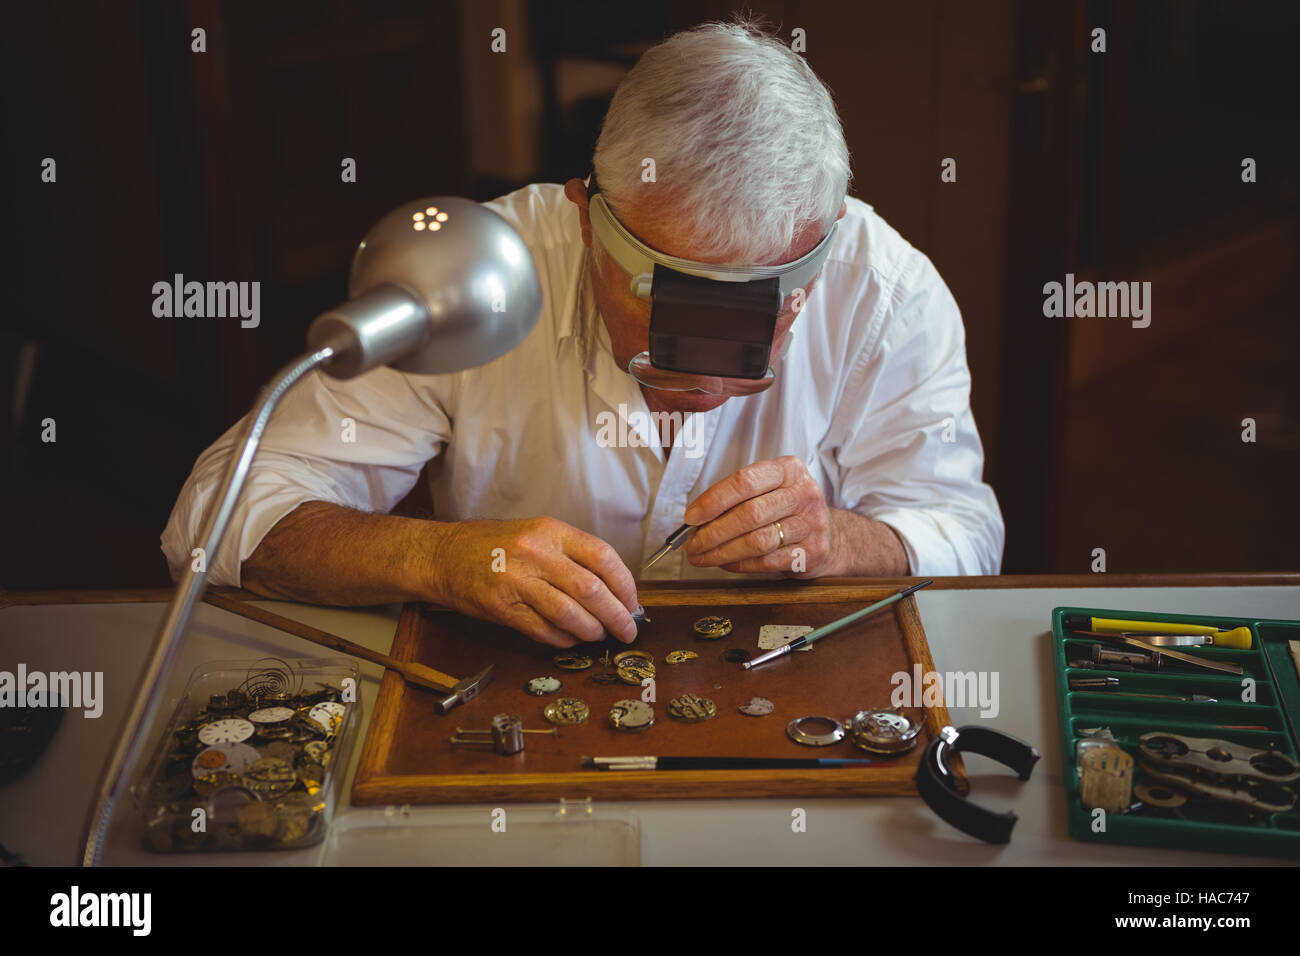 Horologist repairing a watch Stock Photo